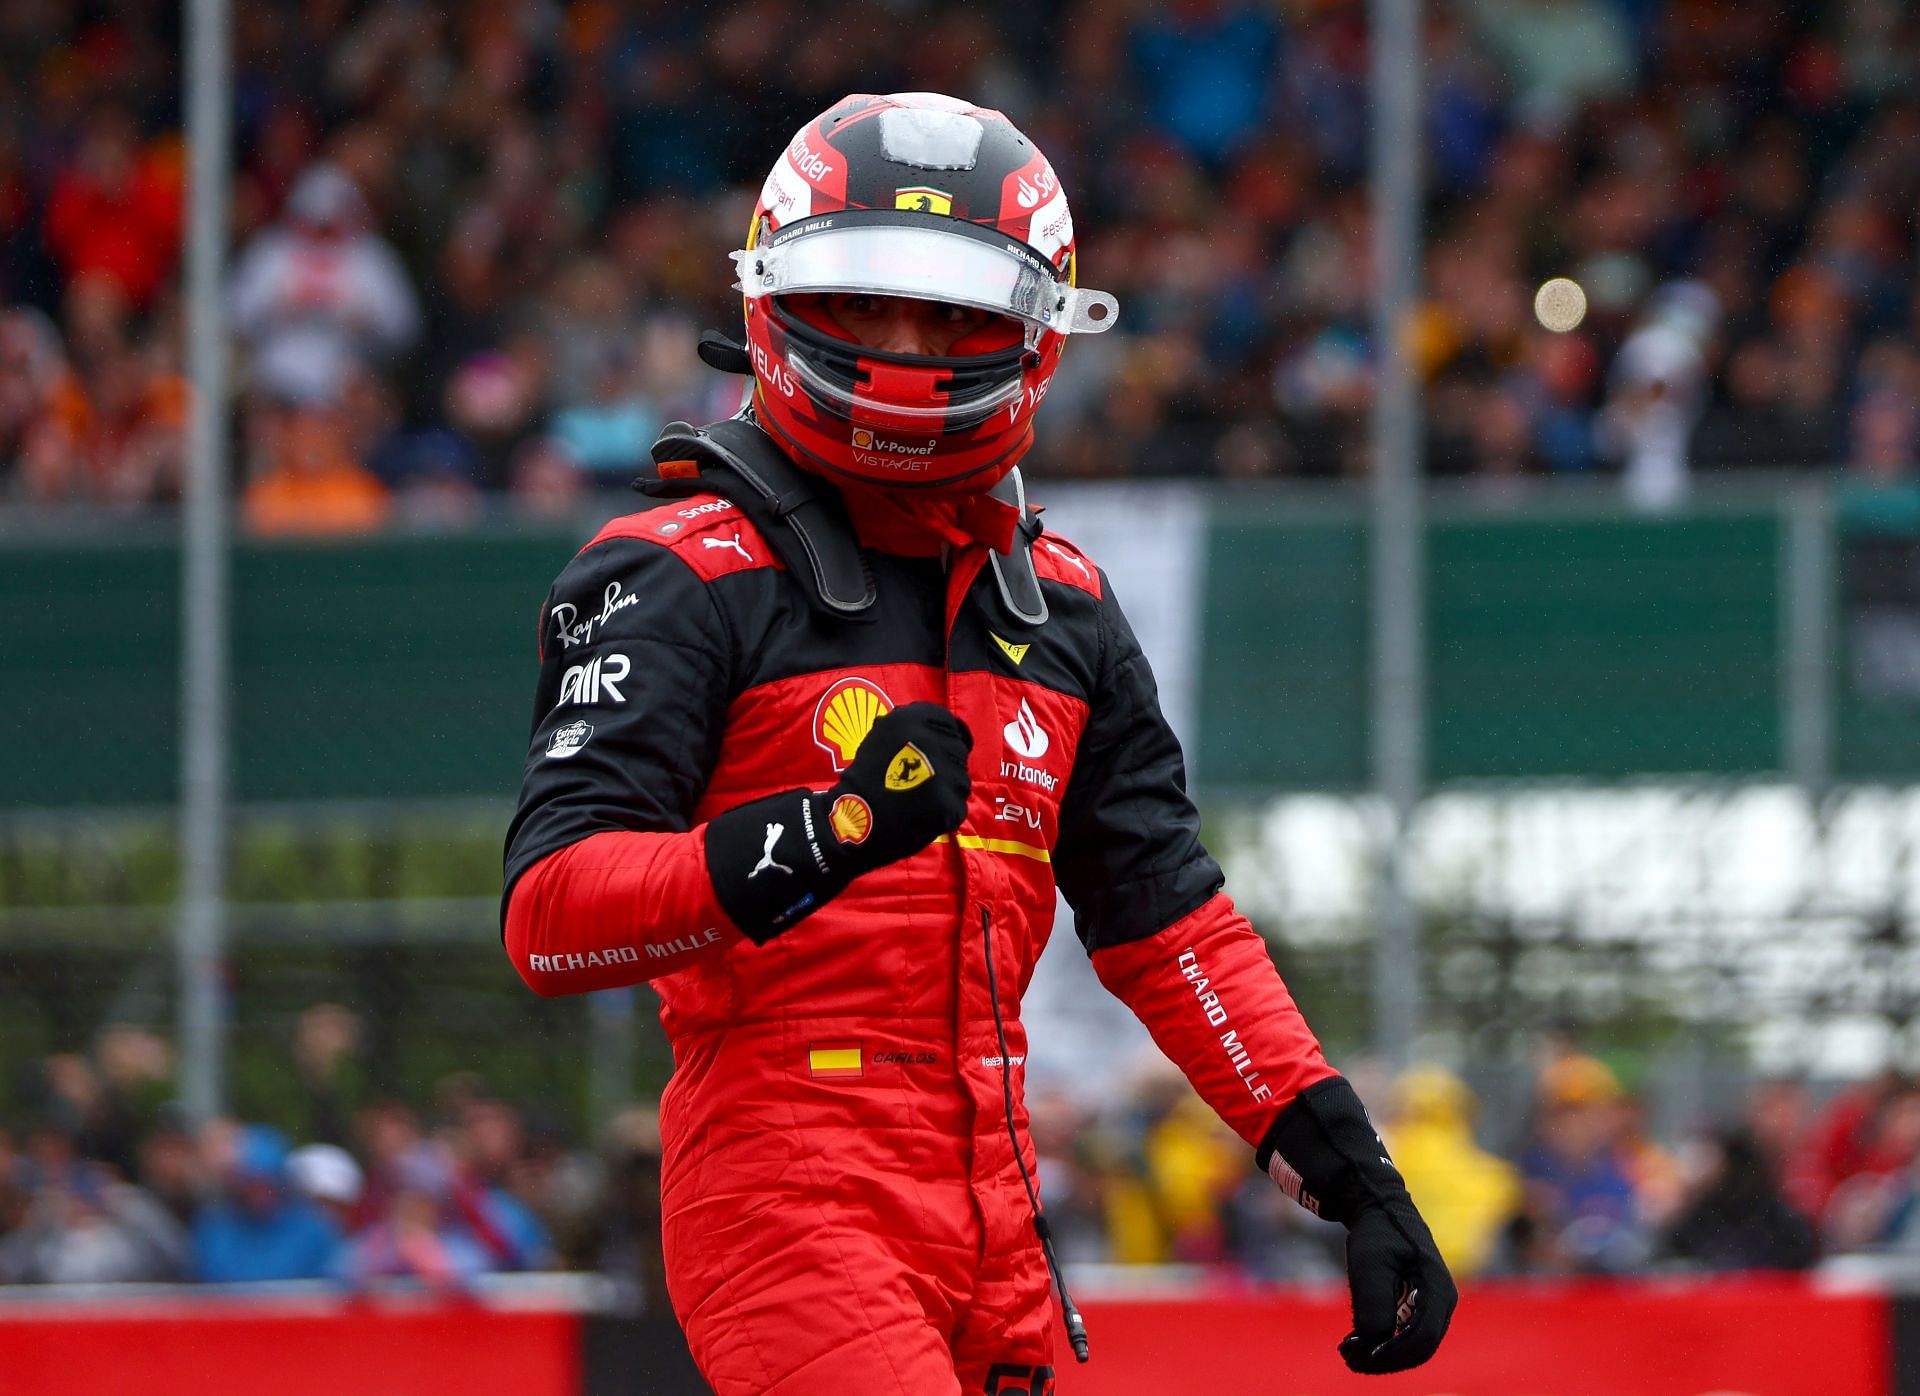 Carlos Sainz won the 2022 F1 Grand Prix of Great Britain